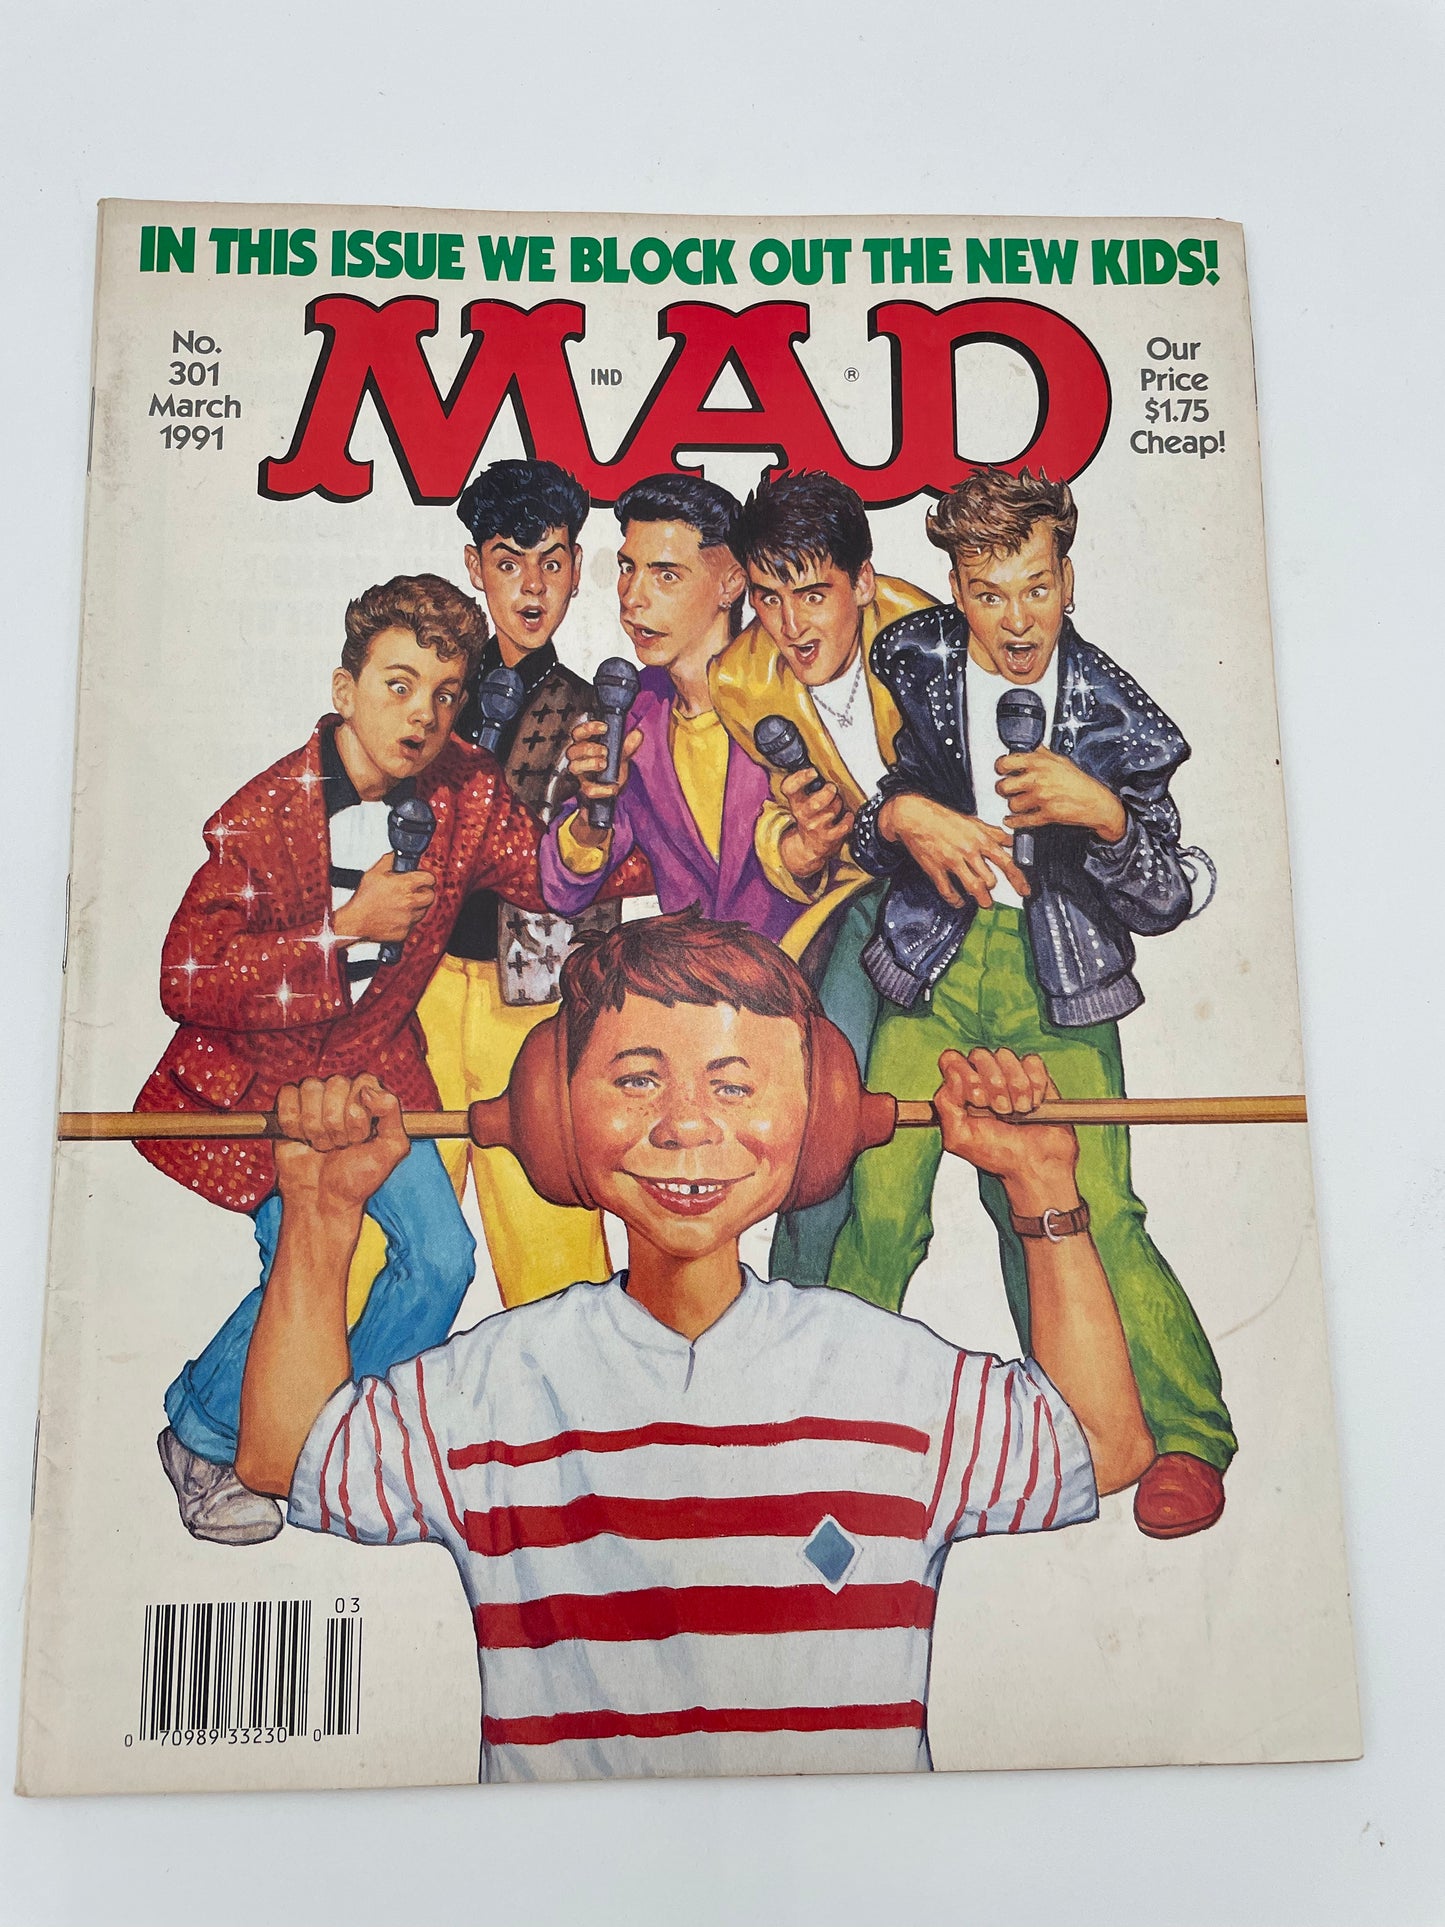 Mad Magazine - New Kids #301 - March 1991 #101342